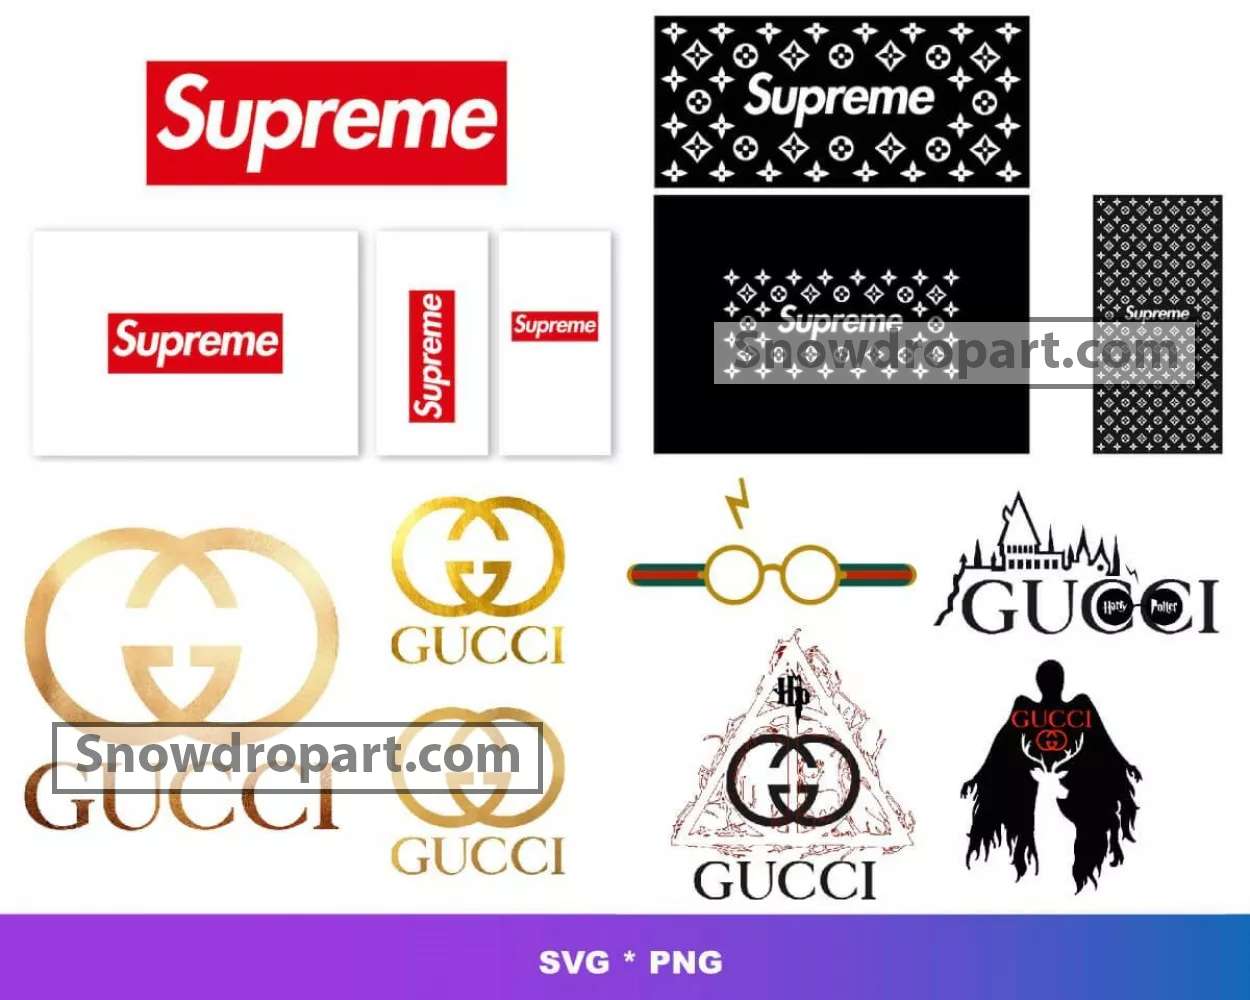 Supreme SVG & PNG Download - Free SVG Download fashion brand